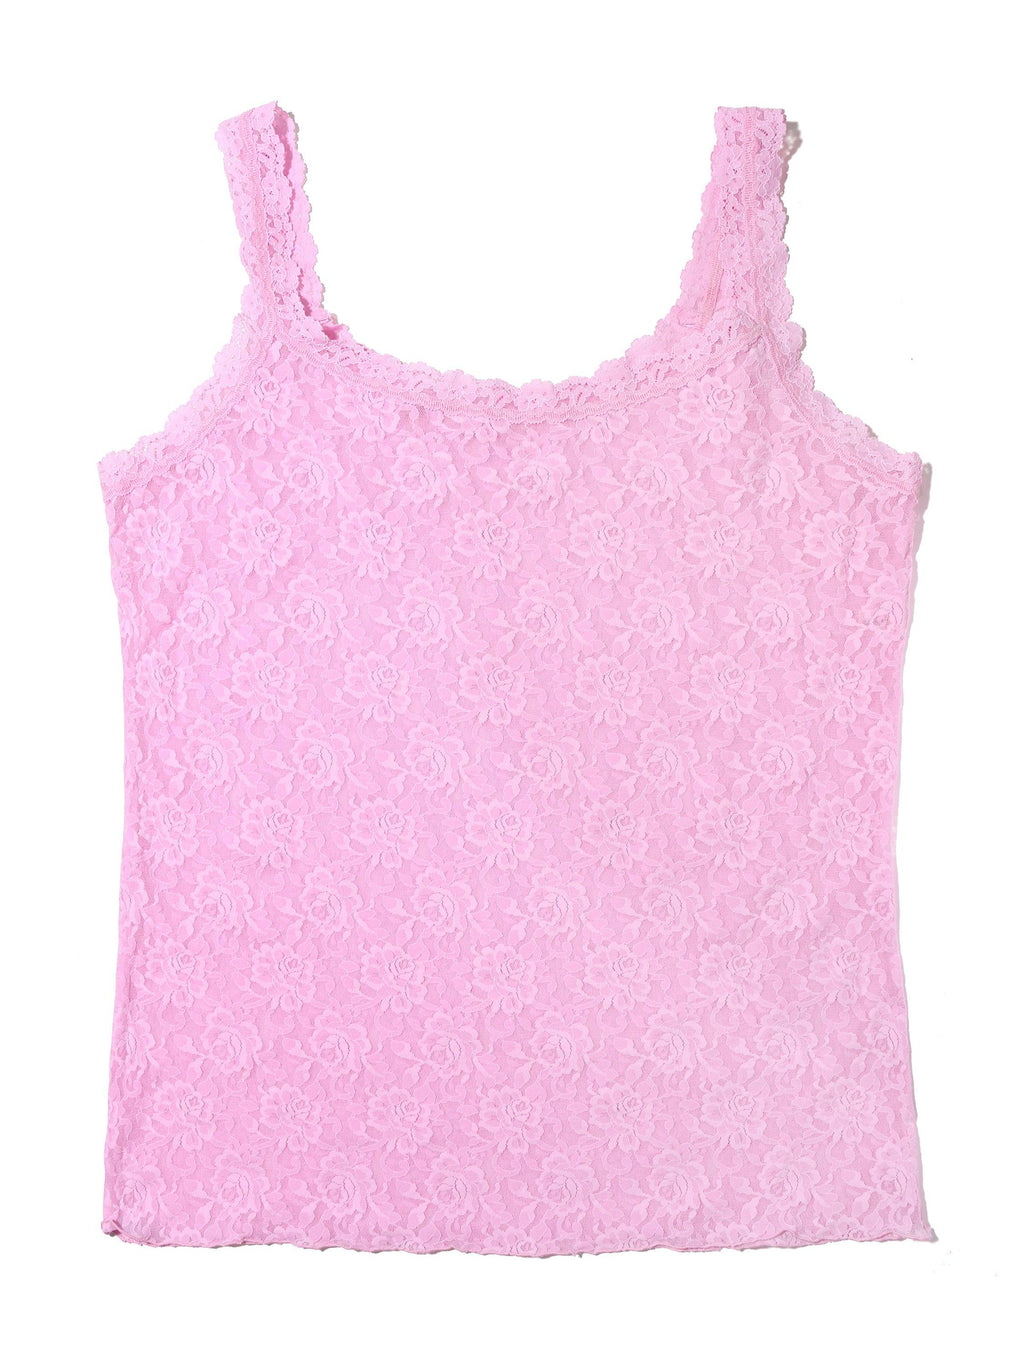  Hot Pink Bustier Top Womens Cotton Camisoles Plus Size